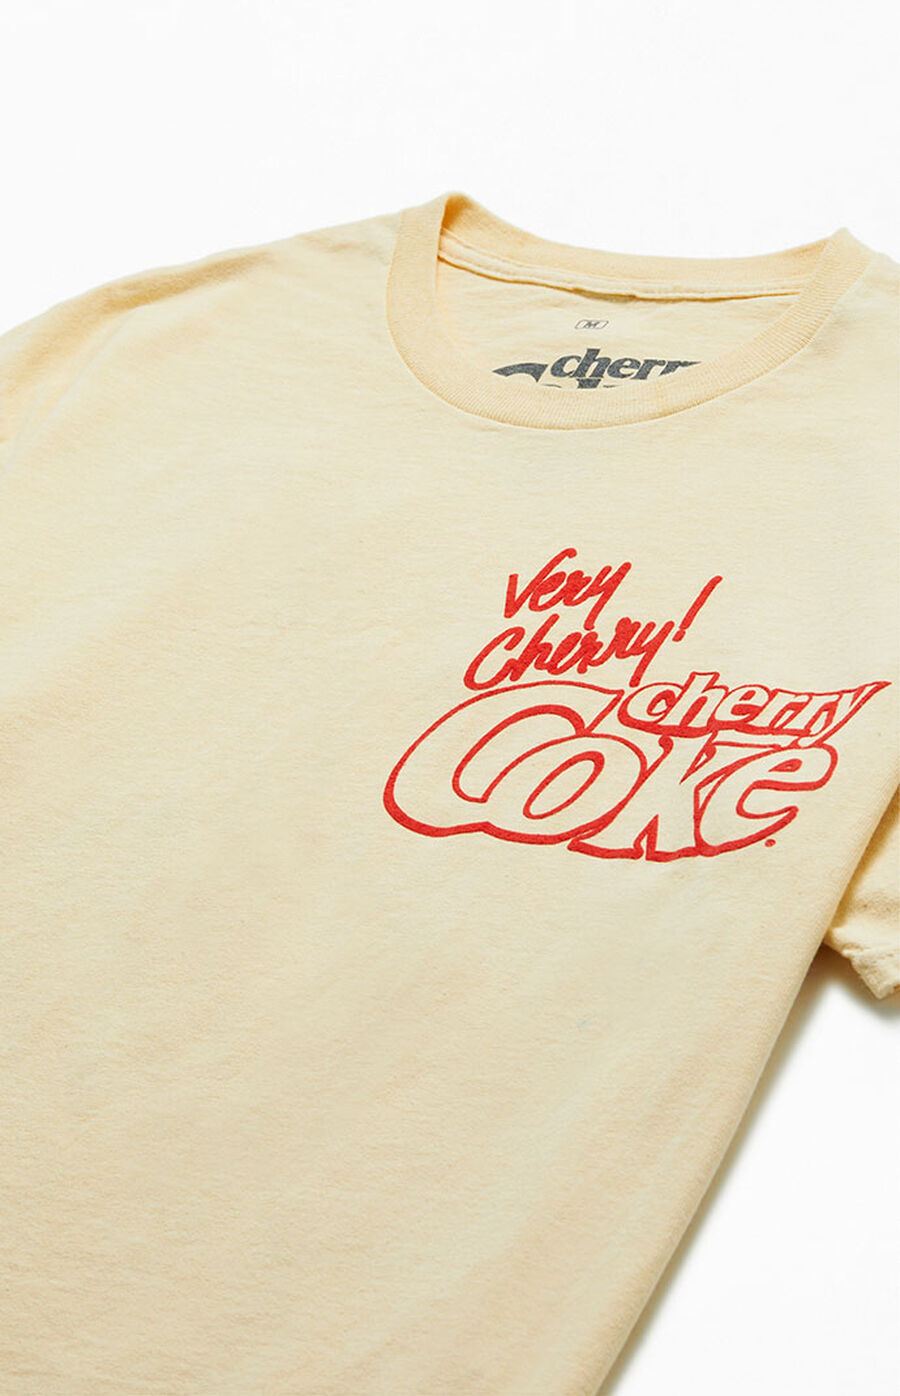 Vintage Cherry Coke T-Shirt | PacSun